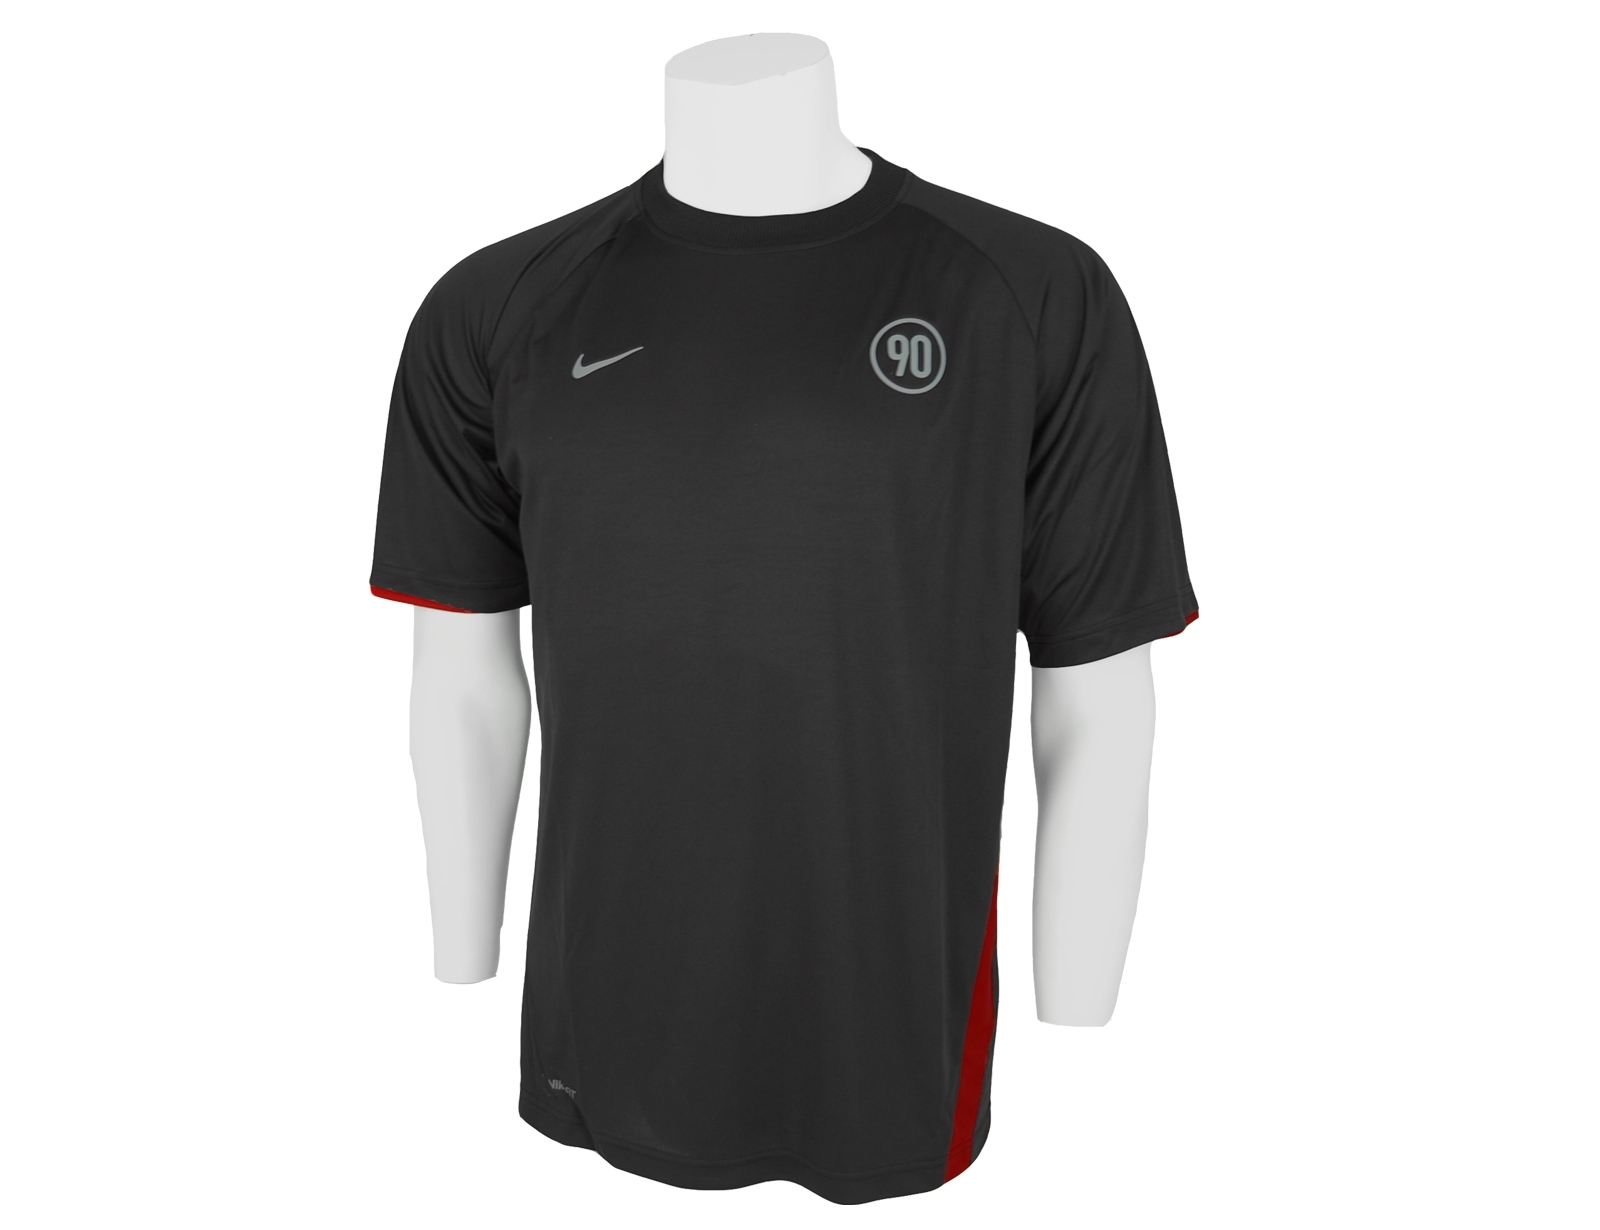 Avantisport - Nike - Boys T90 Short Sleeve Top - Nike Kinder T-shirt